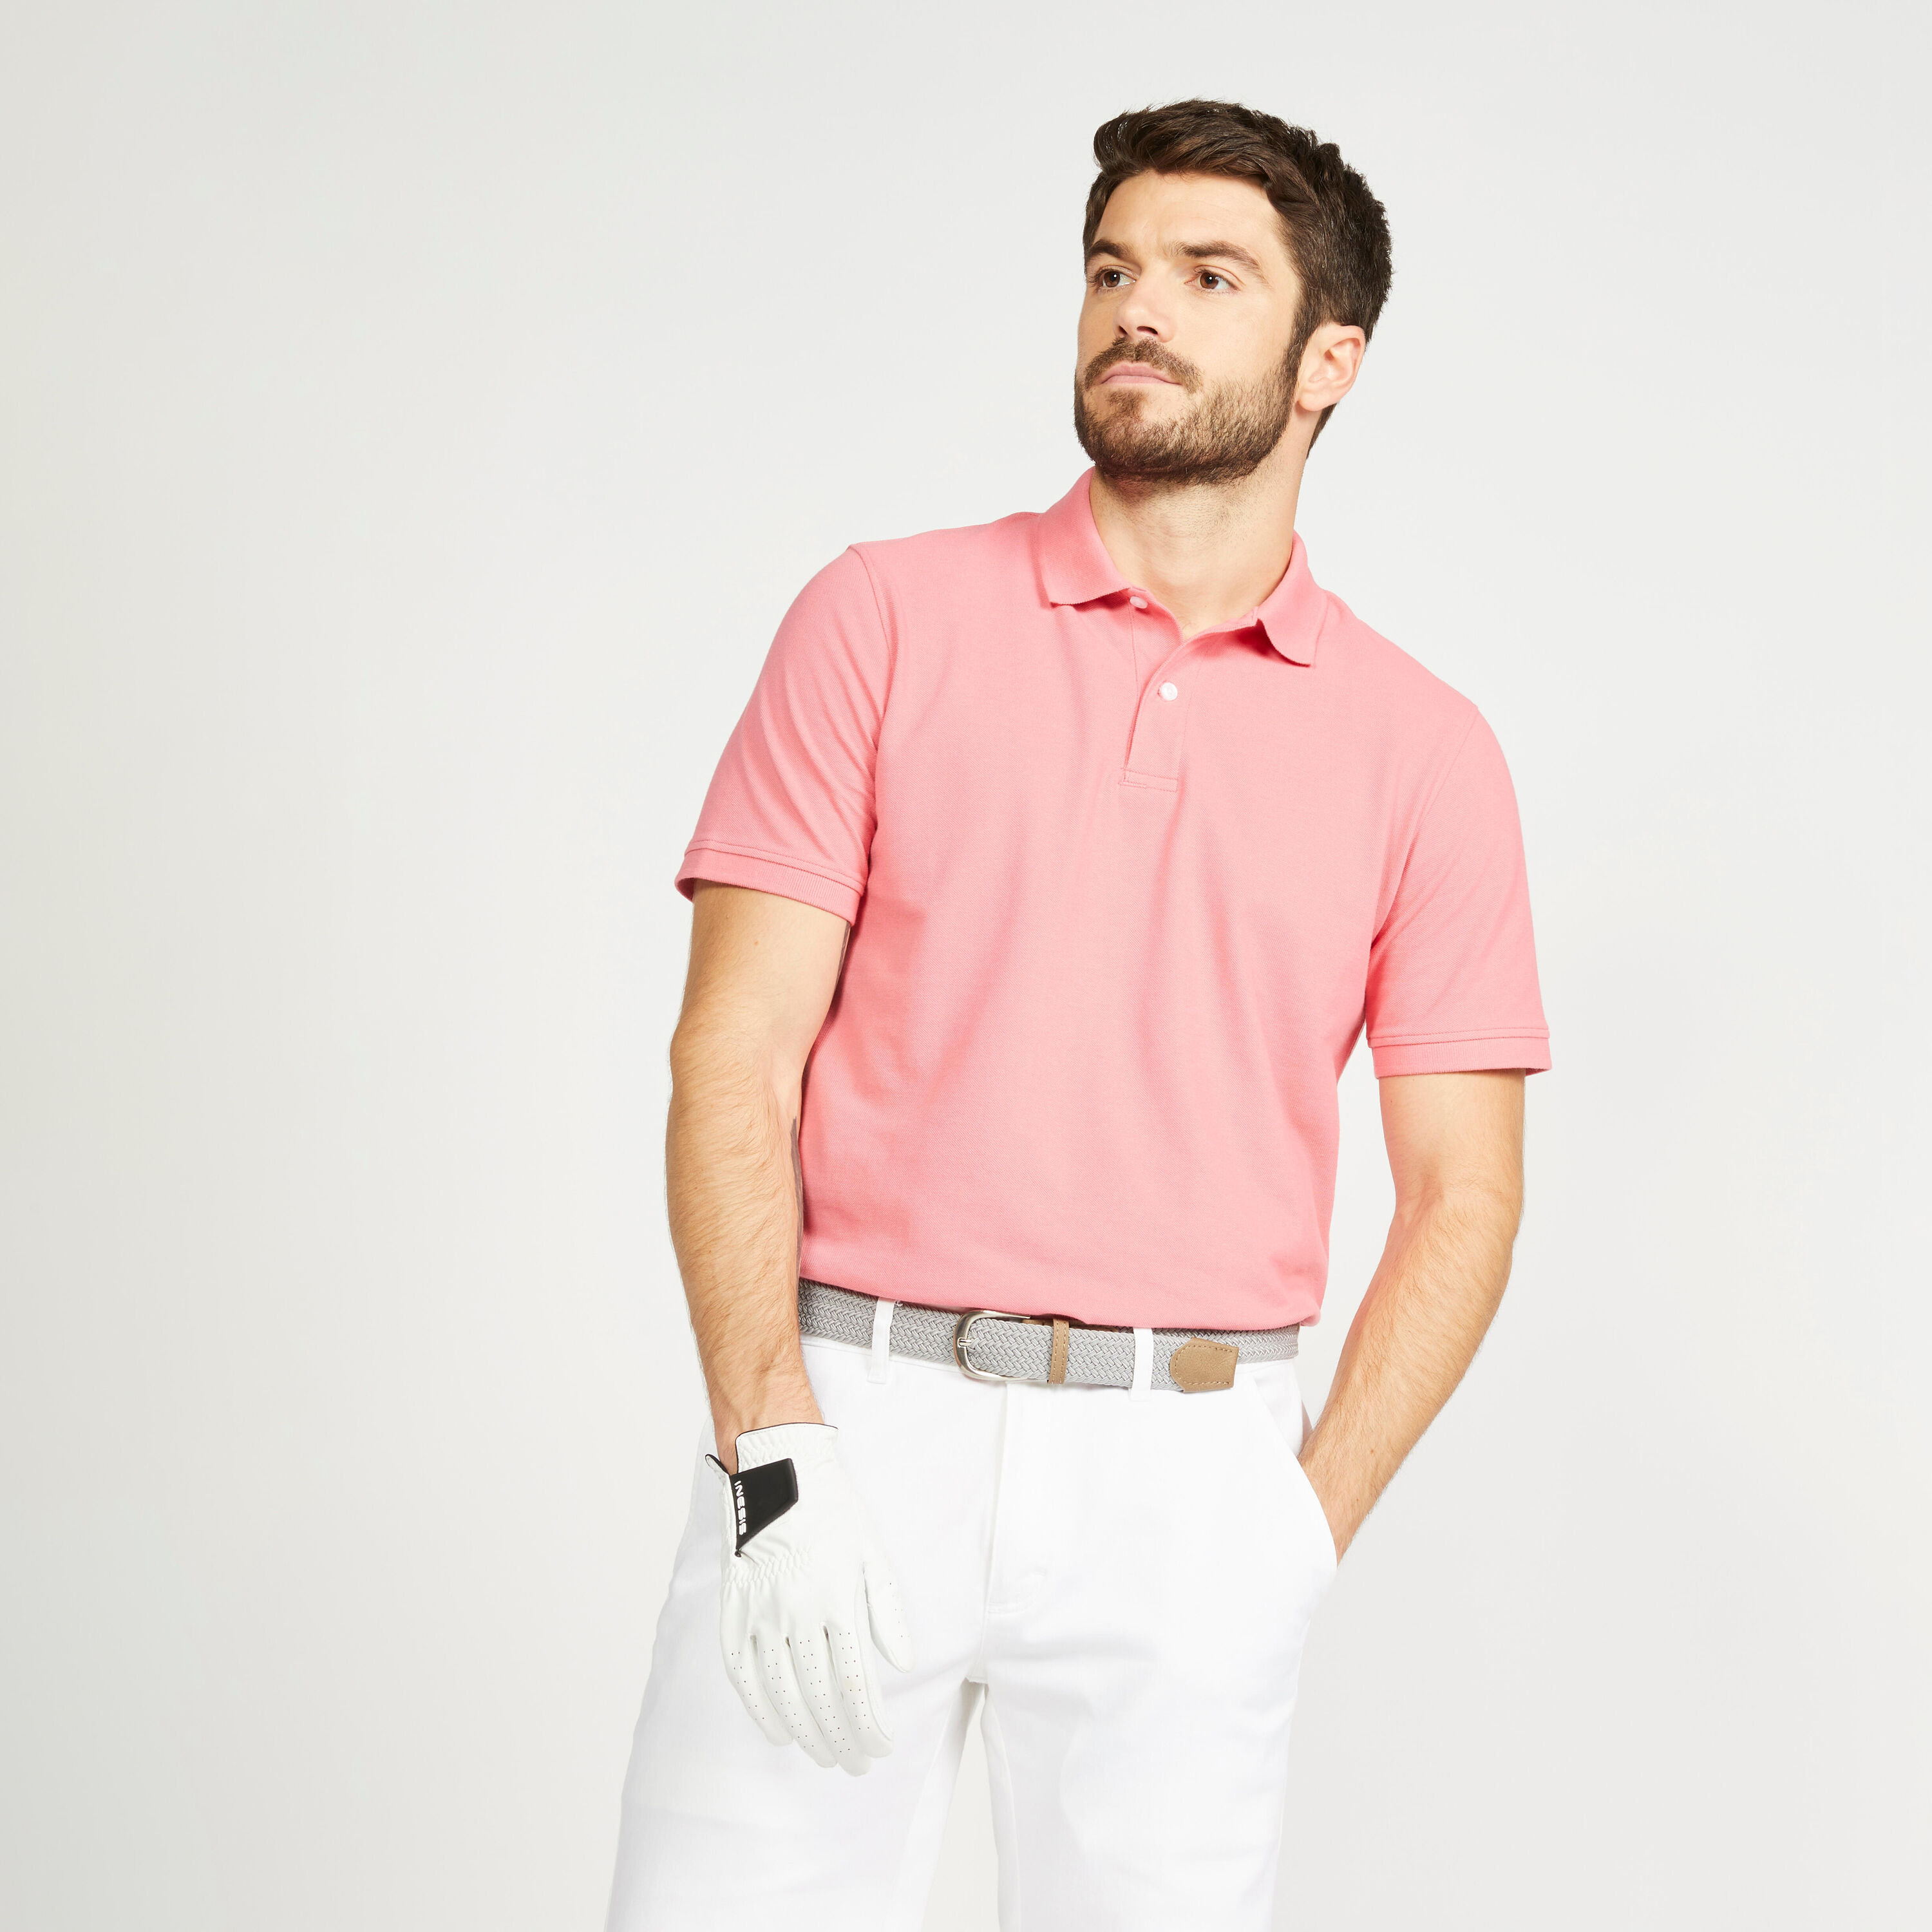 INESIS Men's short-sleeved golf polo shirt - MW500 pink